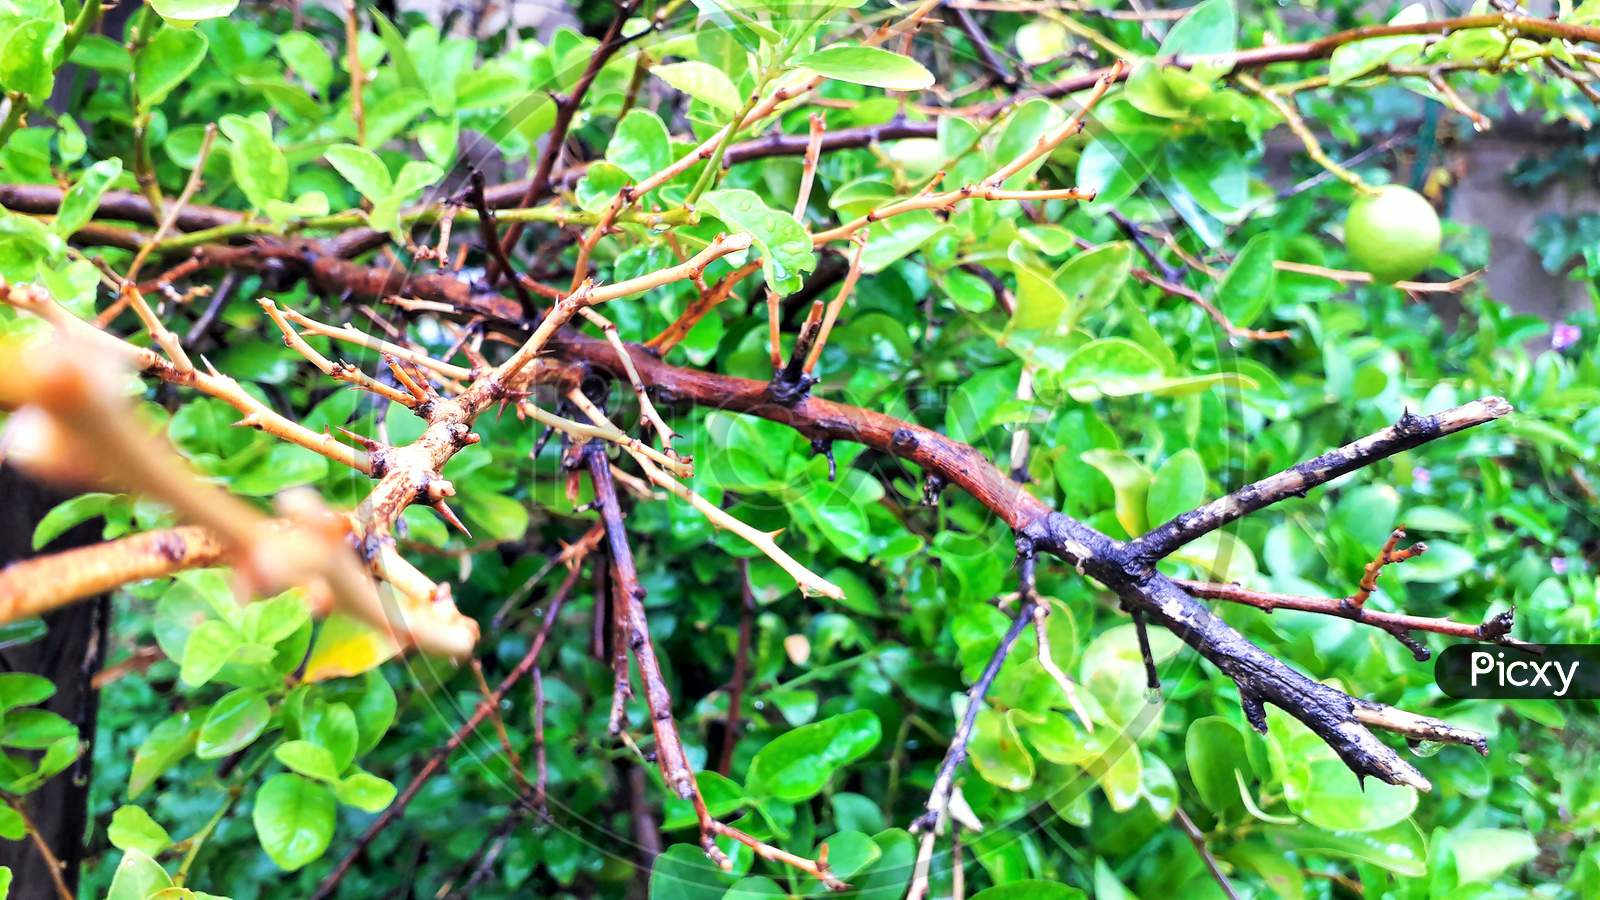 Dead Branch On Lemon Tree With Water Drops On Leaves In Raining